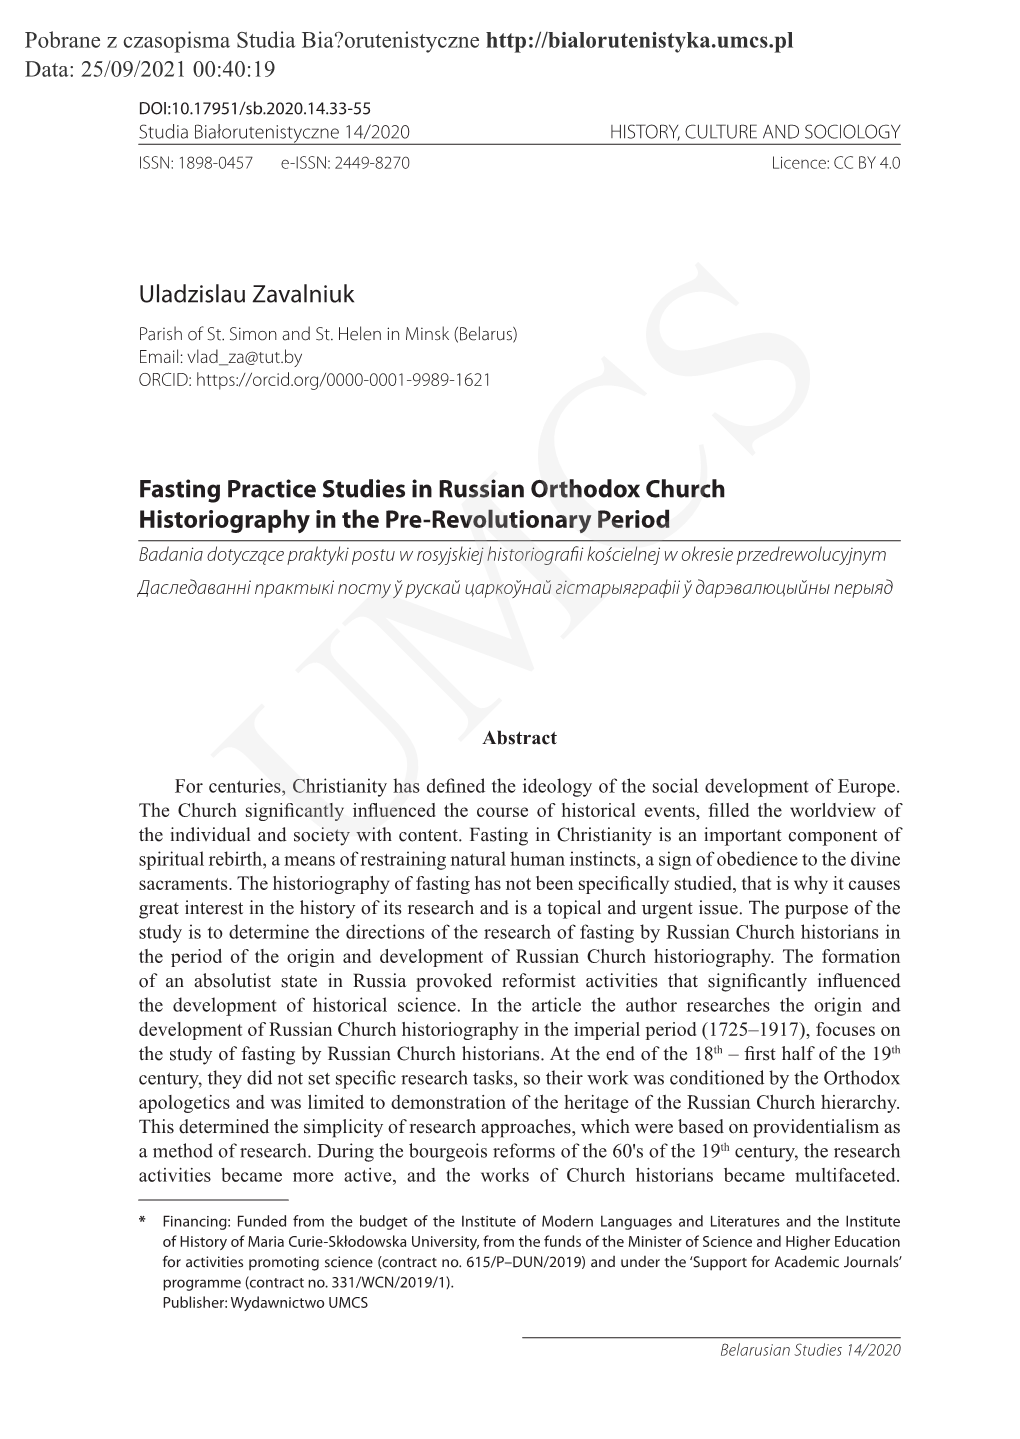 Uladzislau Zavalniuk Fasting Practice Studies in Russian Orthodox